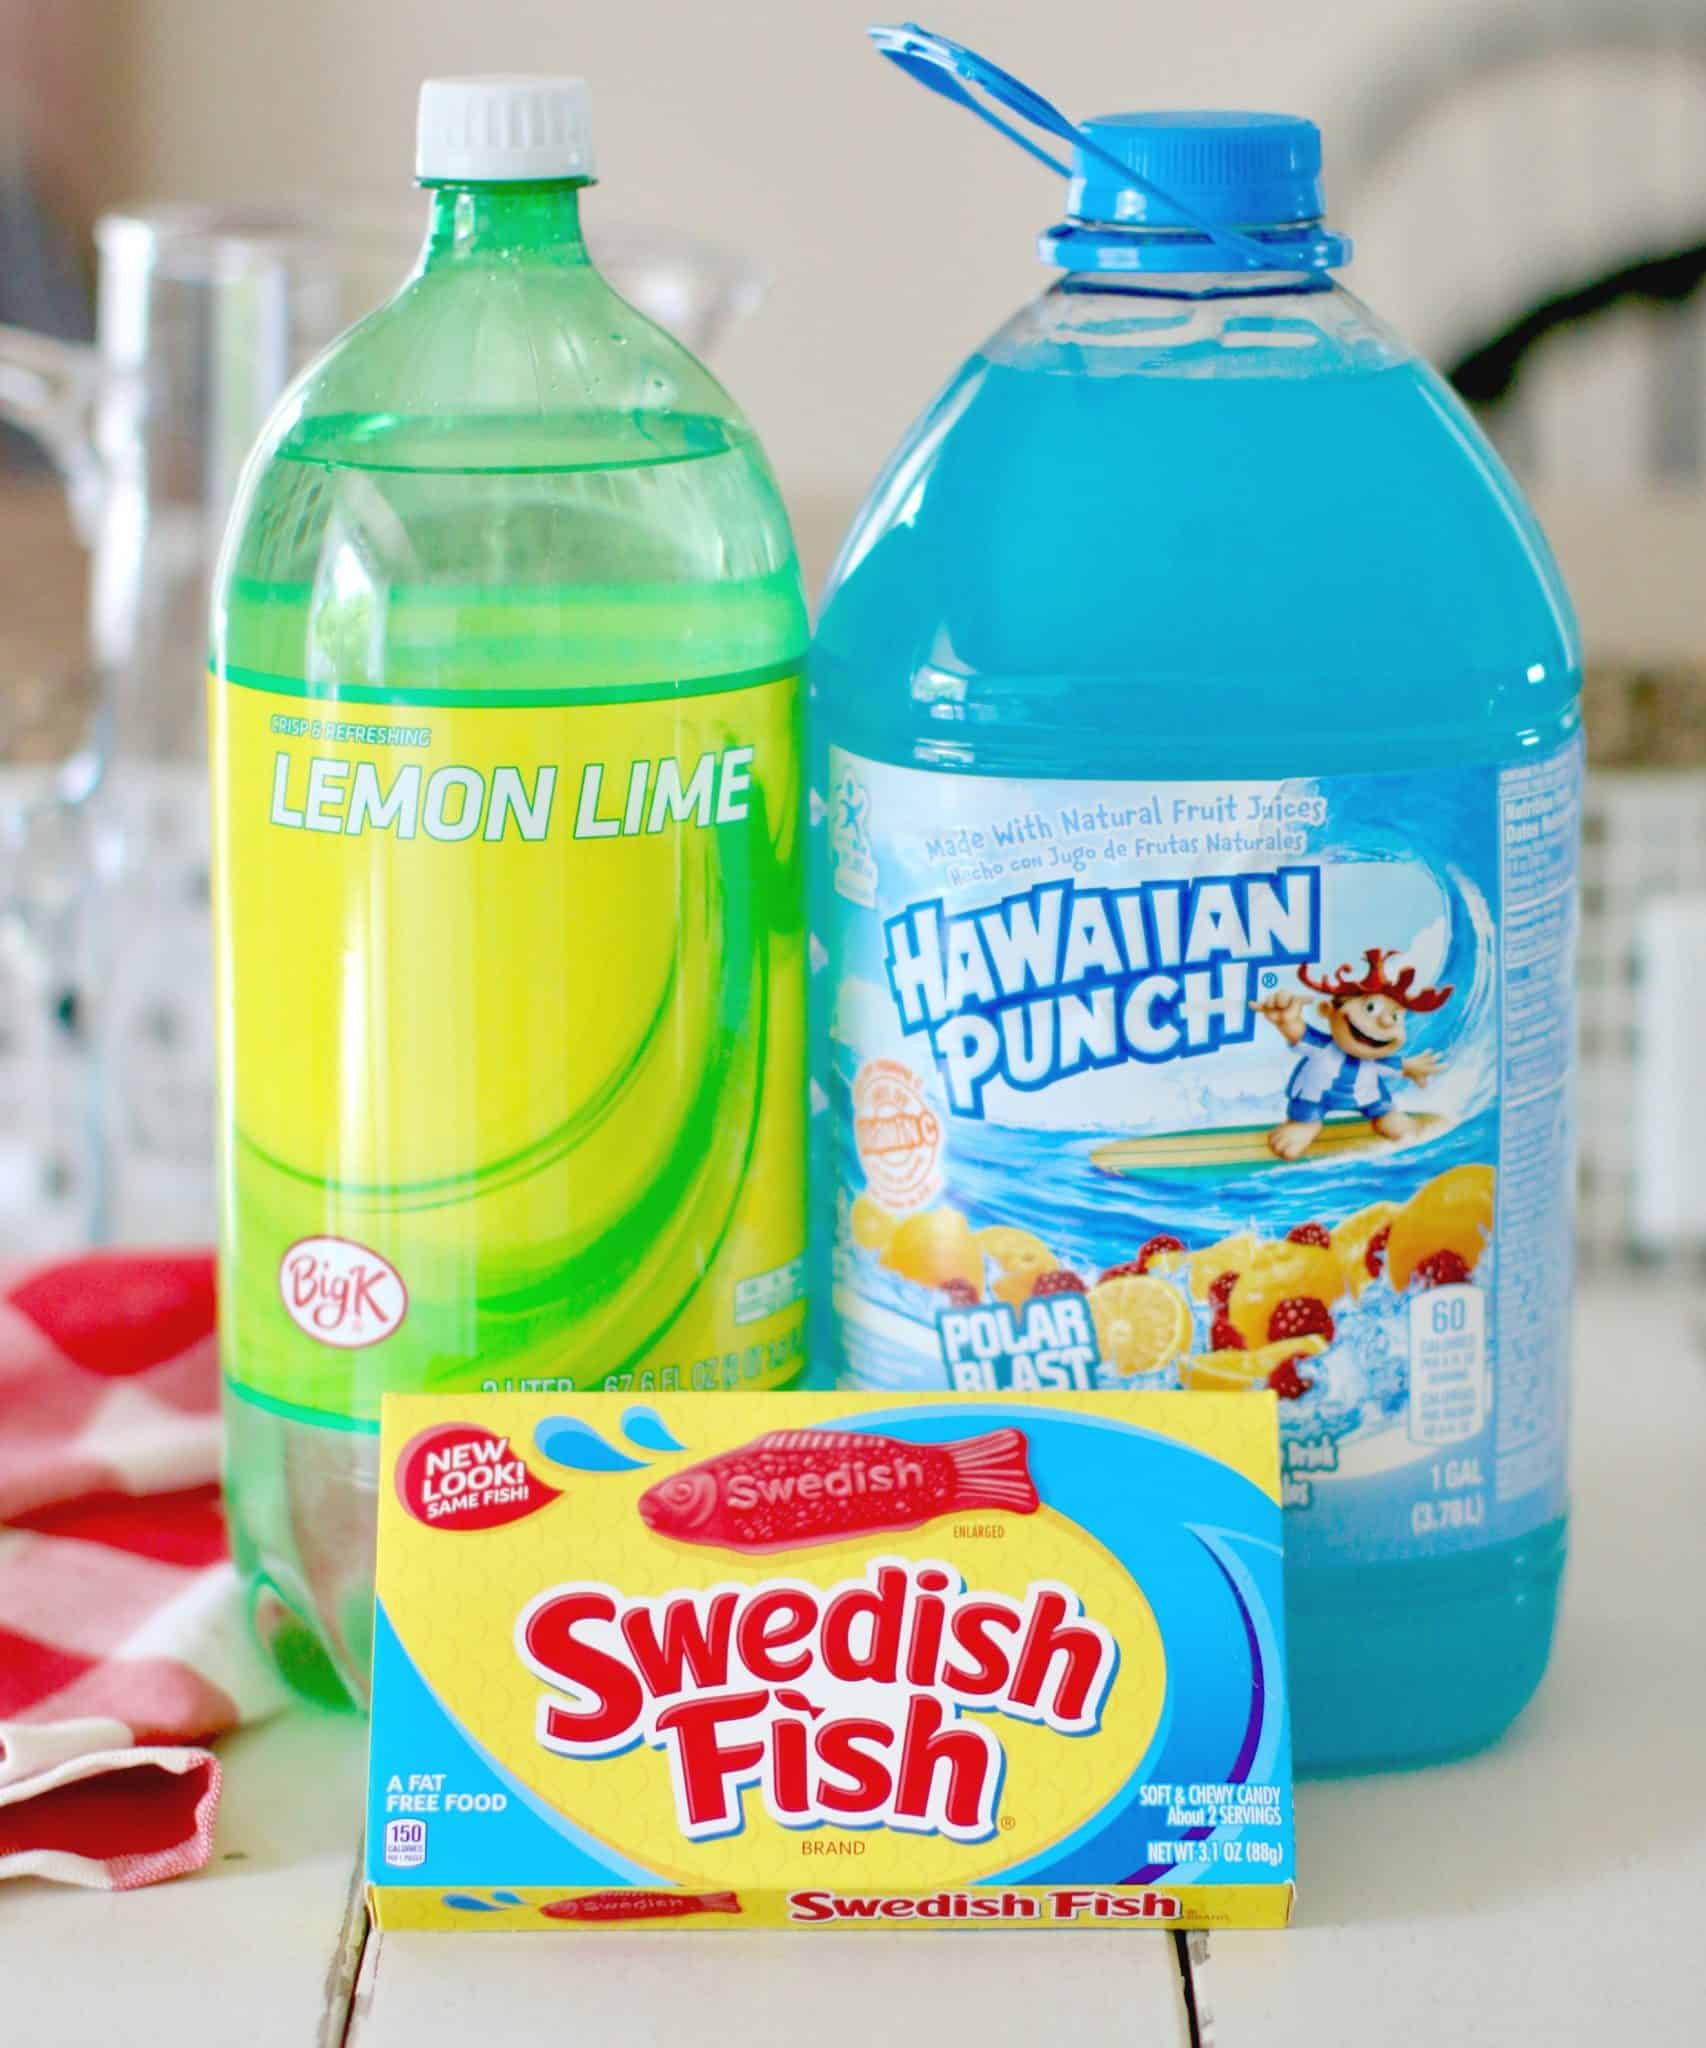 Polar Blast Hawaiian Punch, Lemon Lime soda and Swedish Fish.